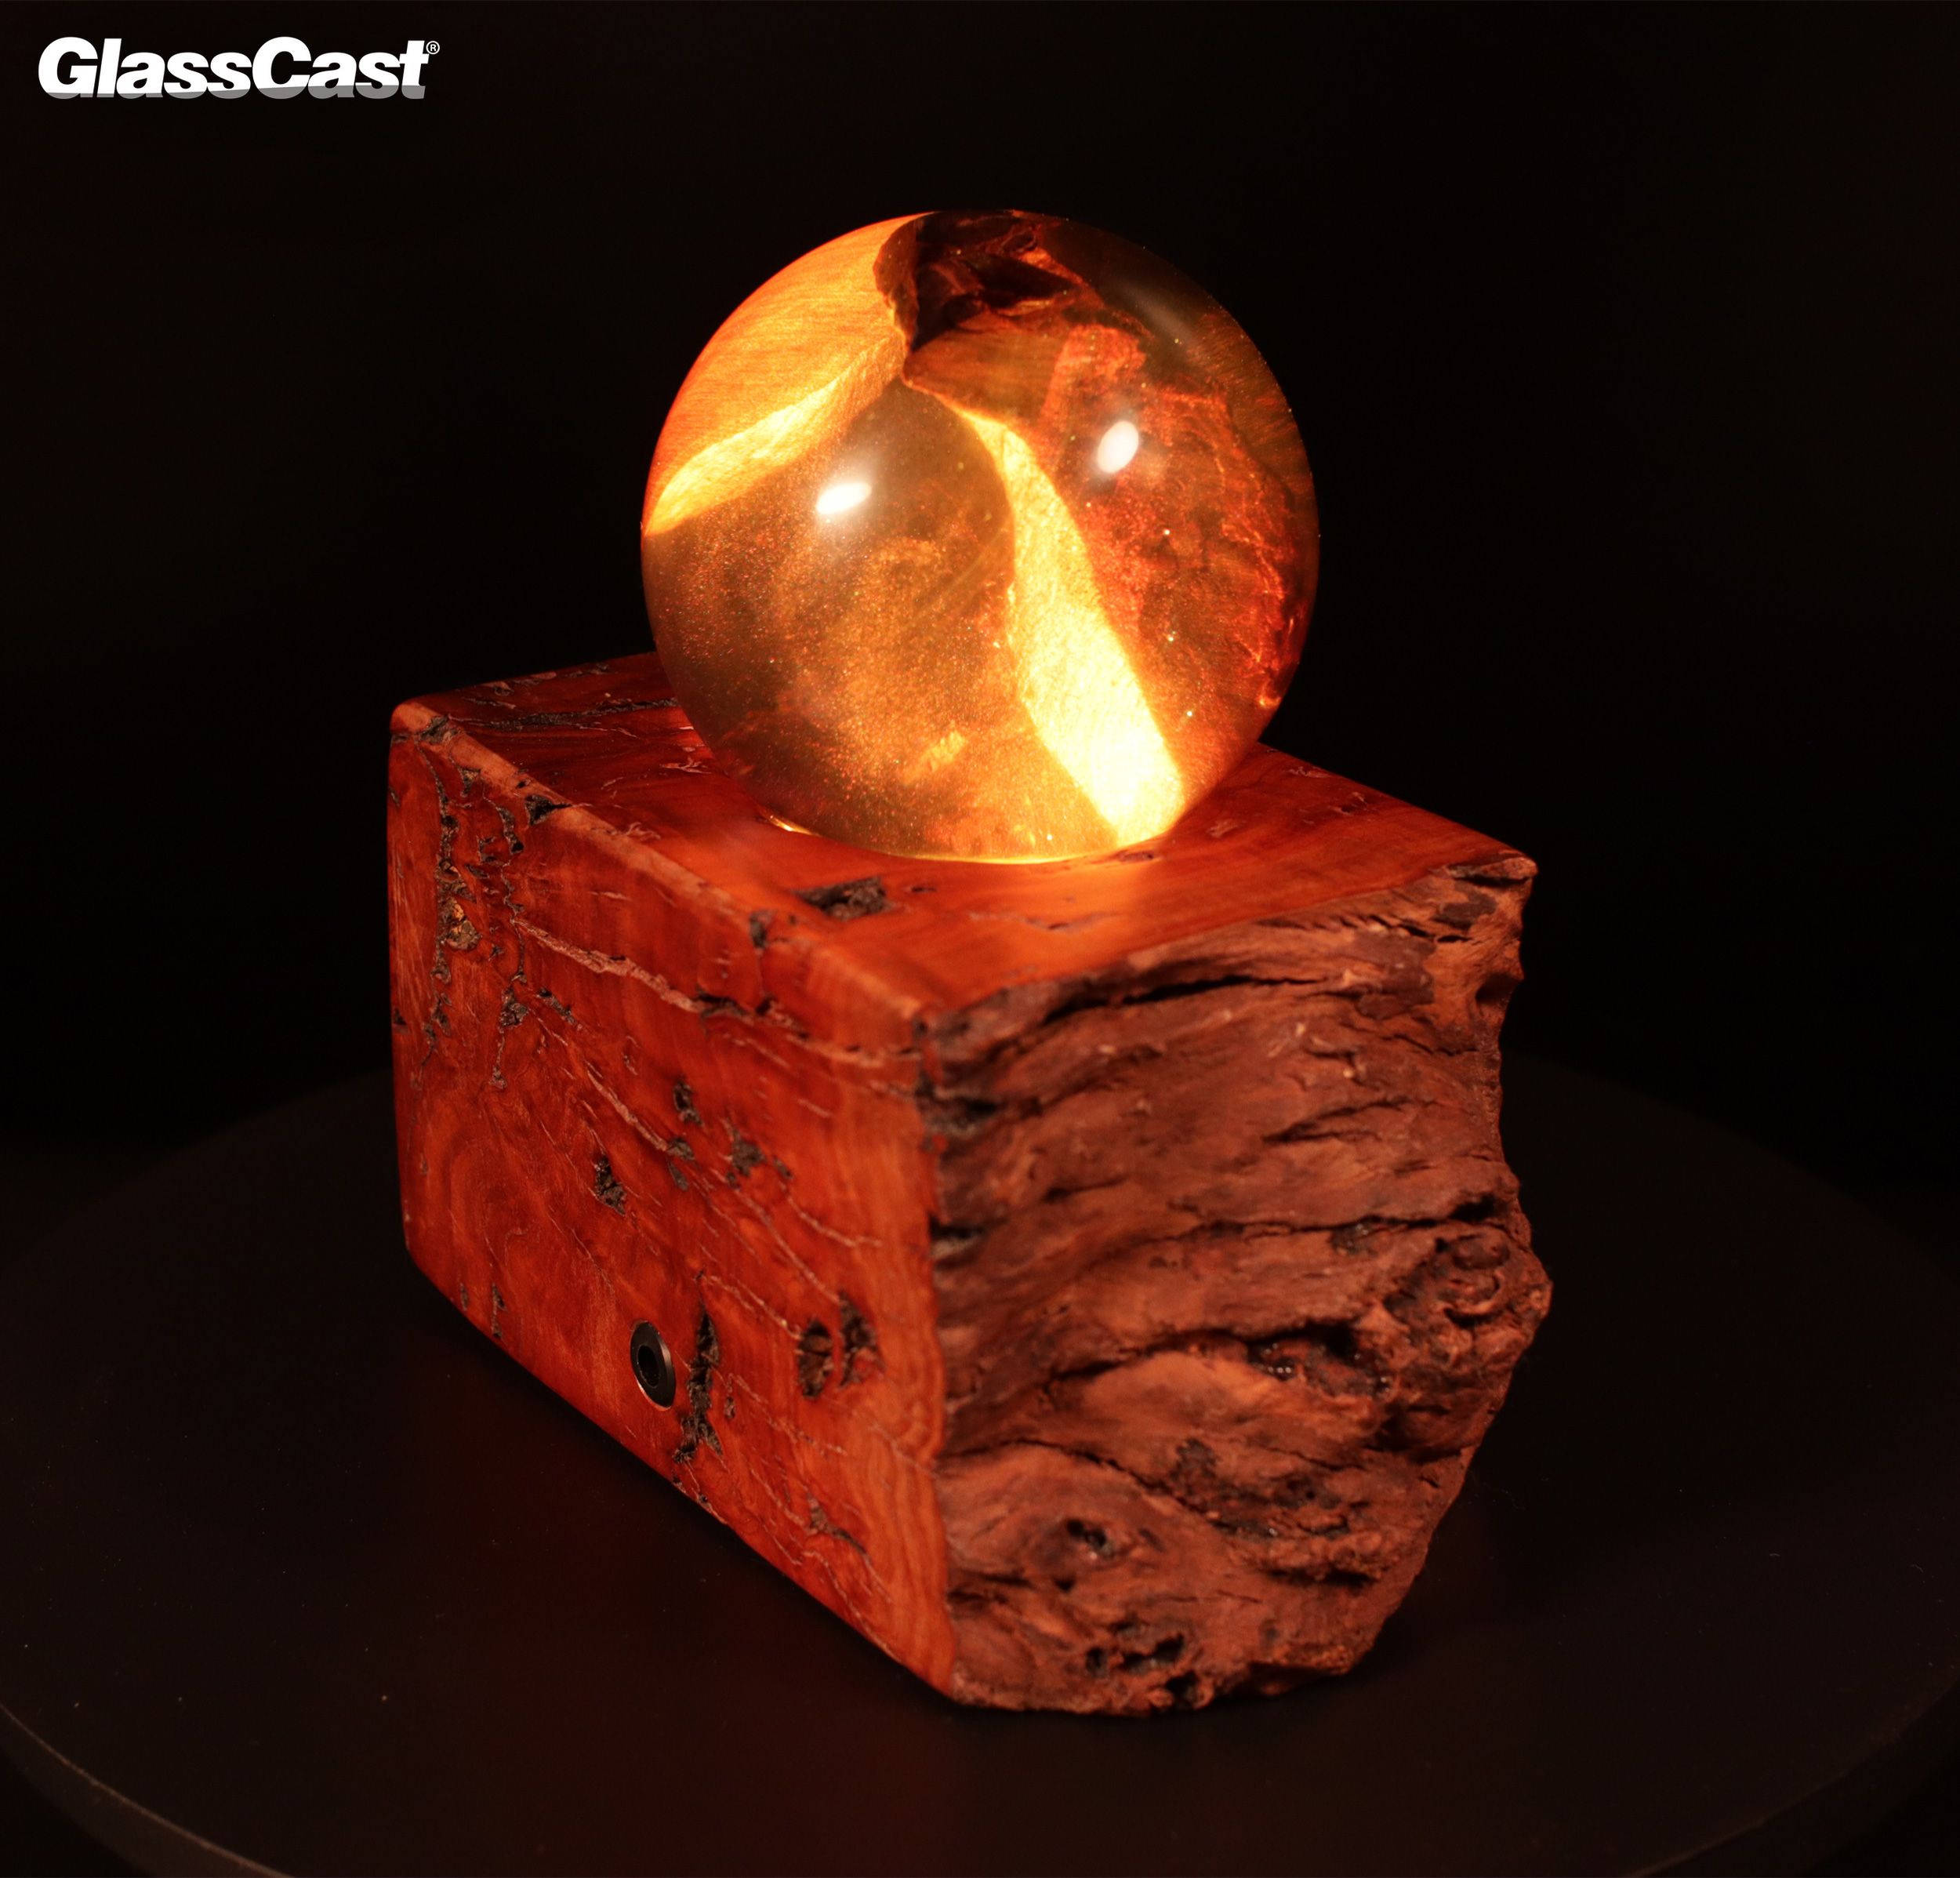 Epoxy Resin Handmade Lamps - GlassCast